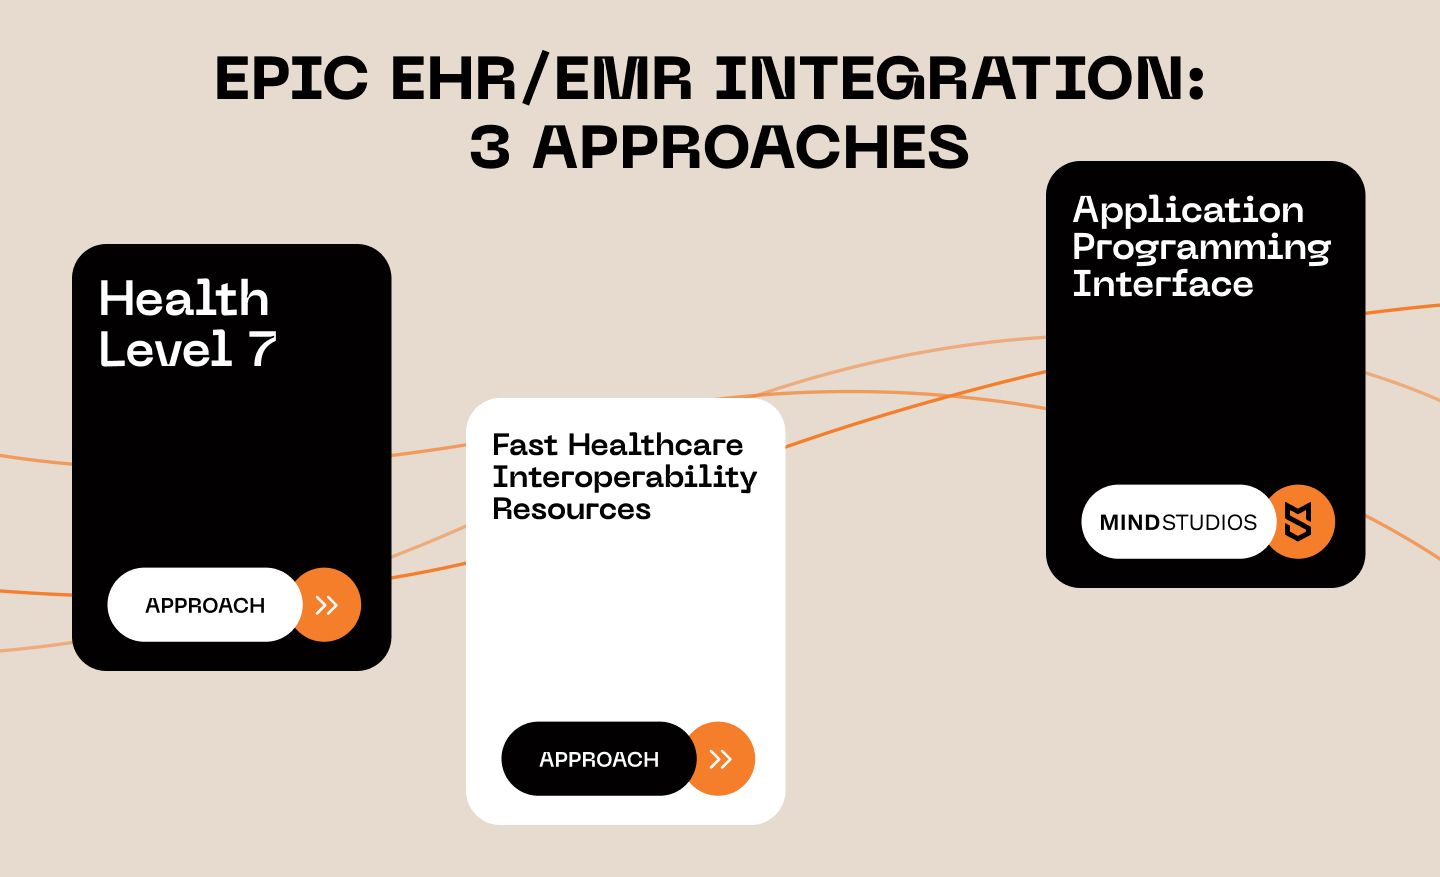 Epic EHR/EMR Integration: 3 Approaches